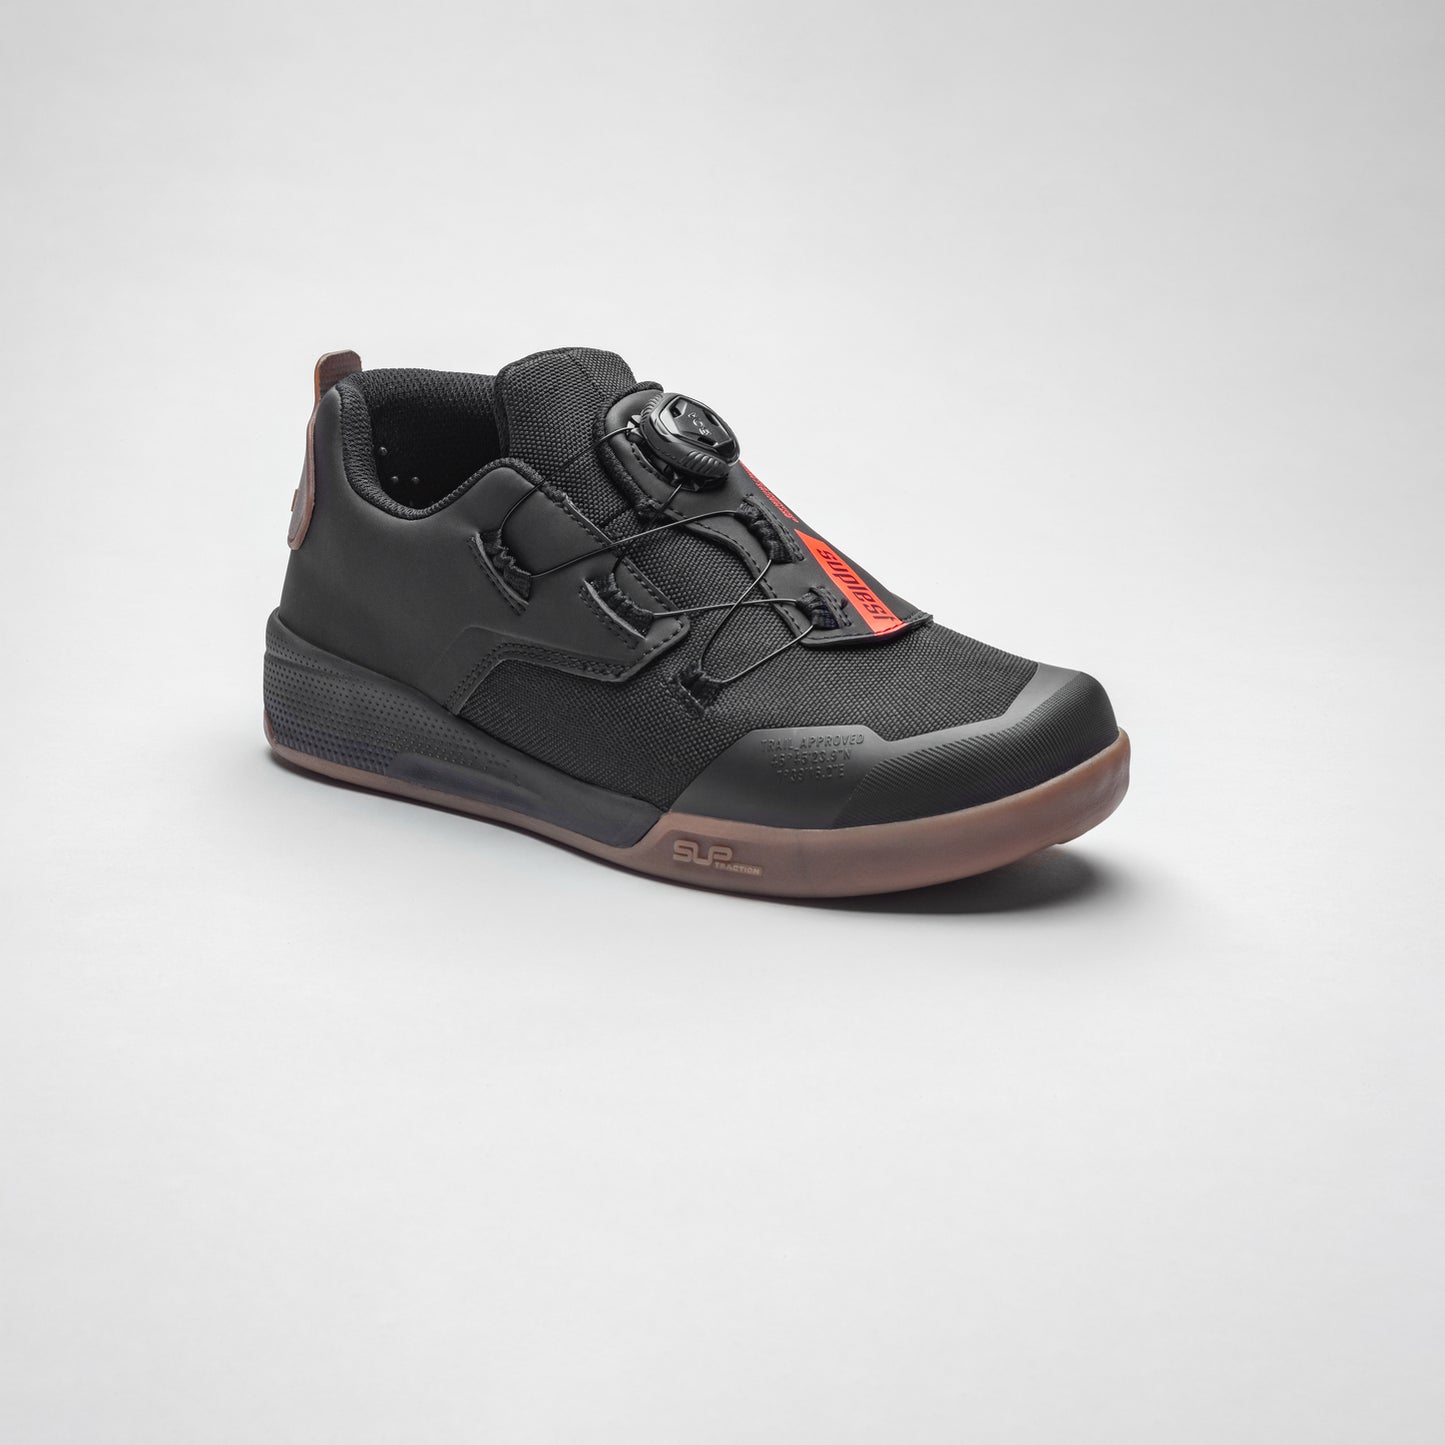 Suplest schoenen Flat pedal Pro Offroad